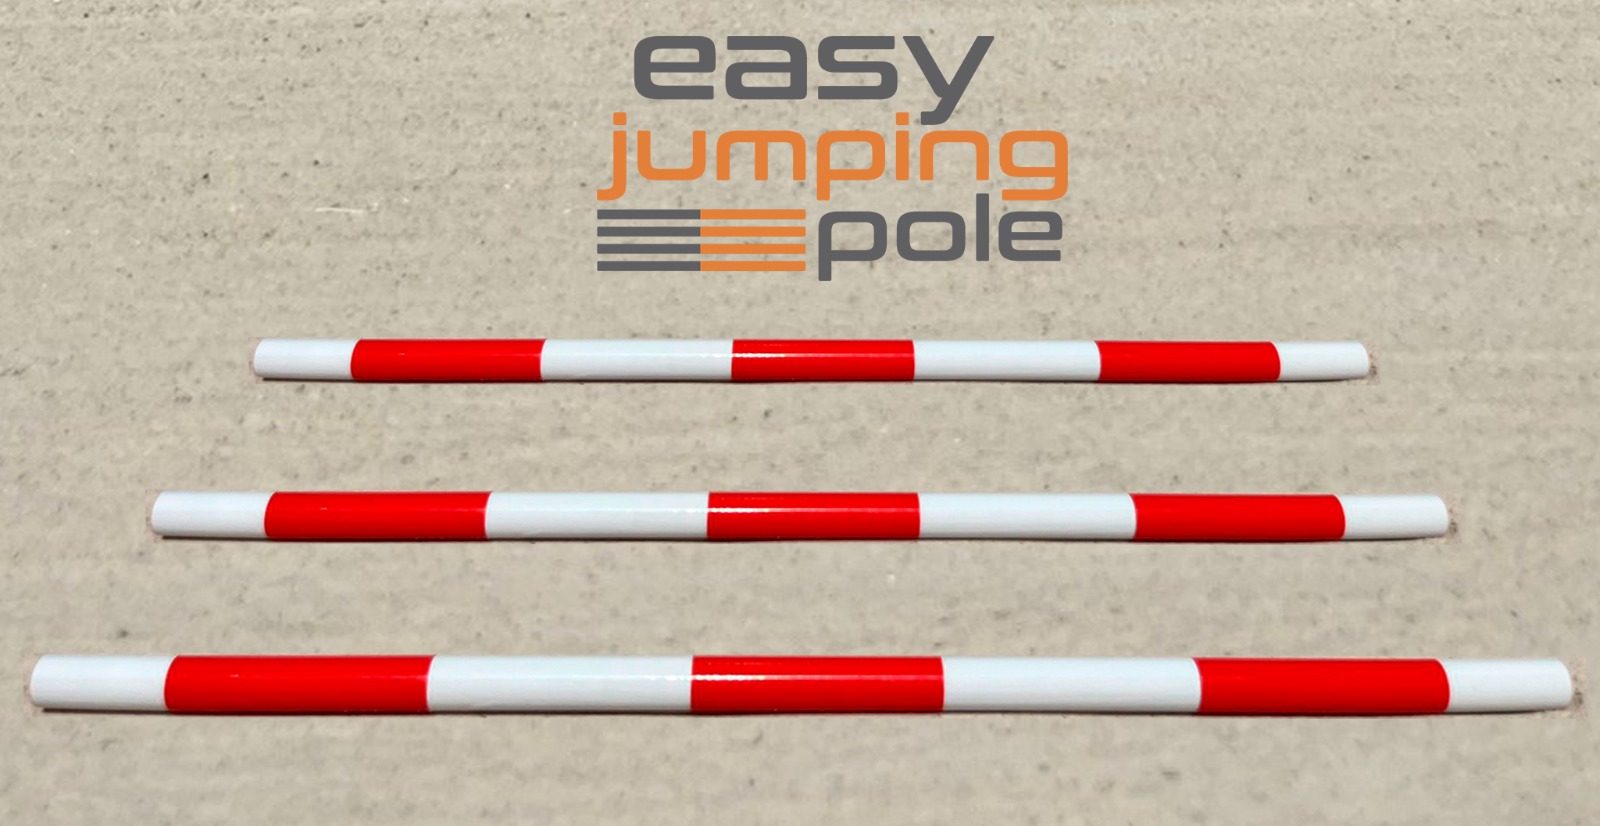 Easy jumping pole Model C-8